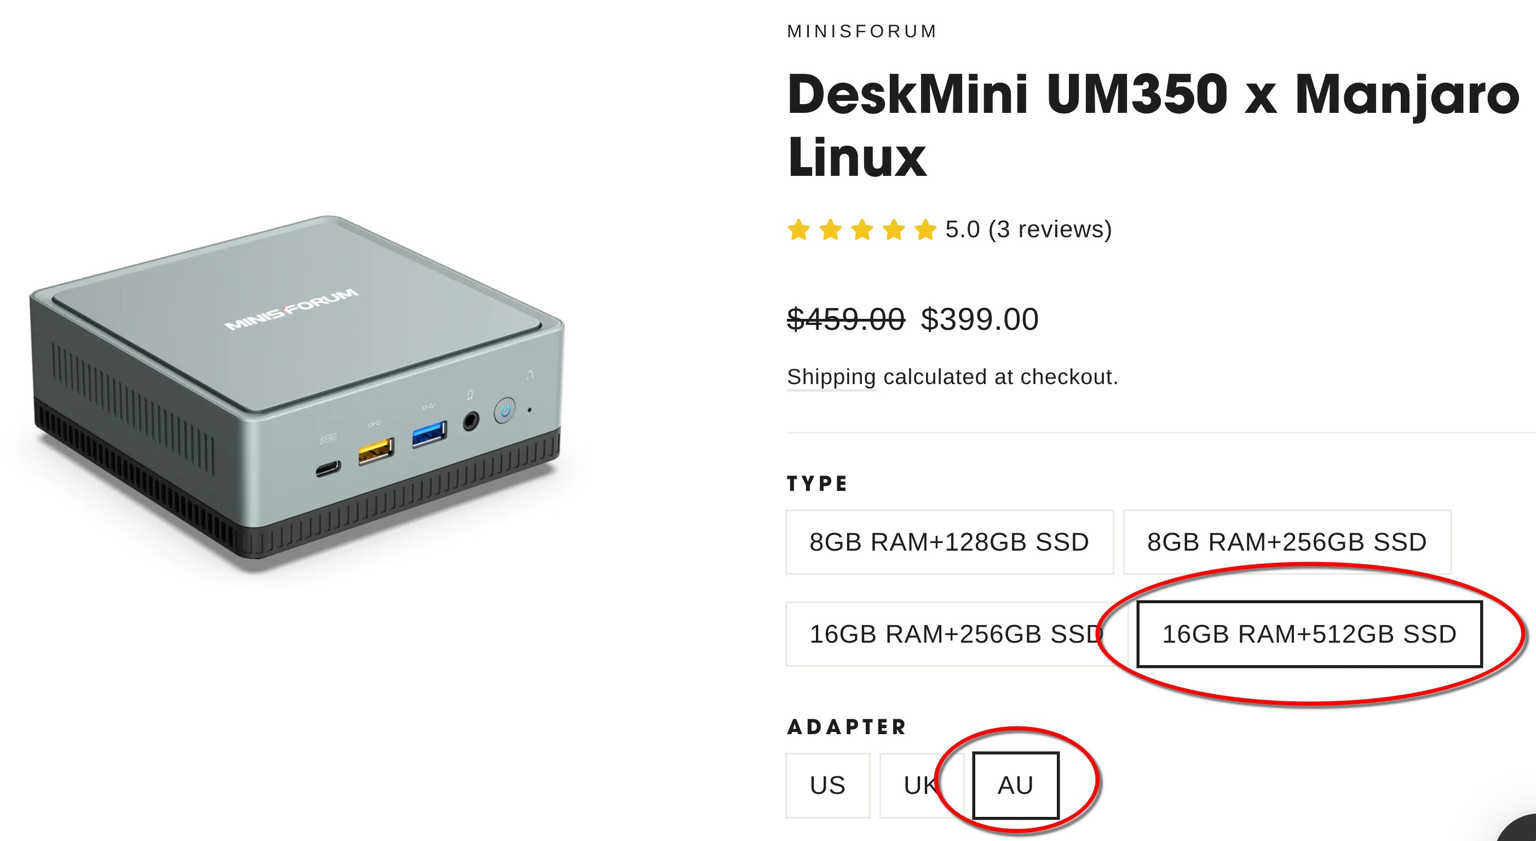 MinisForum DeskMini UM350 with Manjaro Linux pre-installed